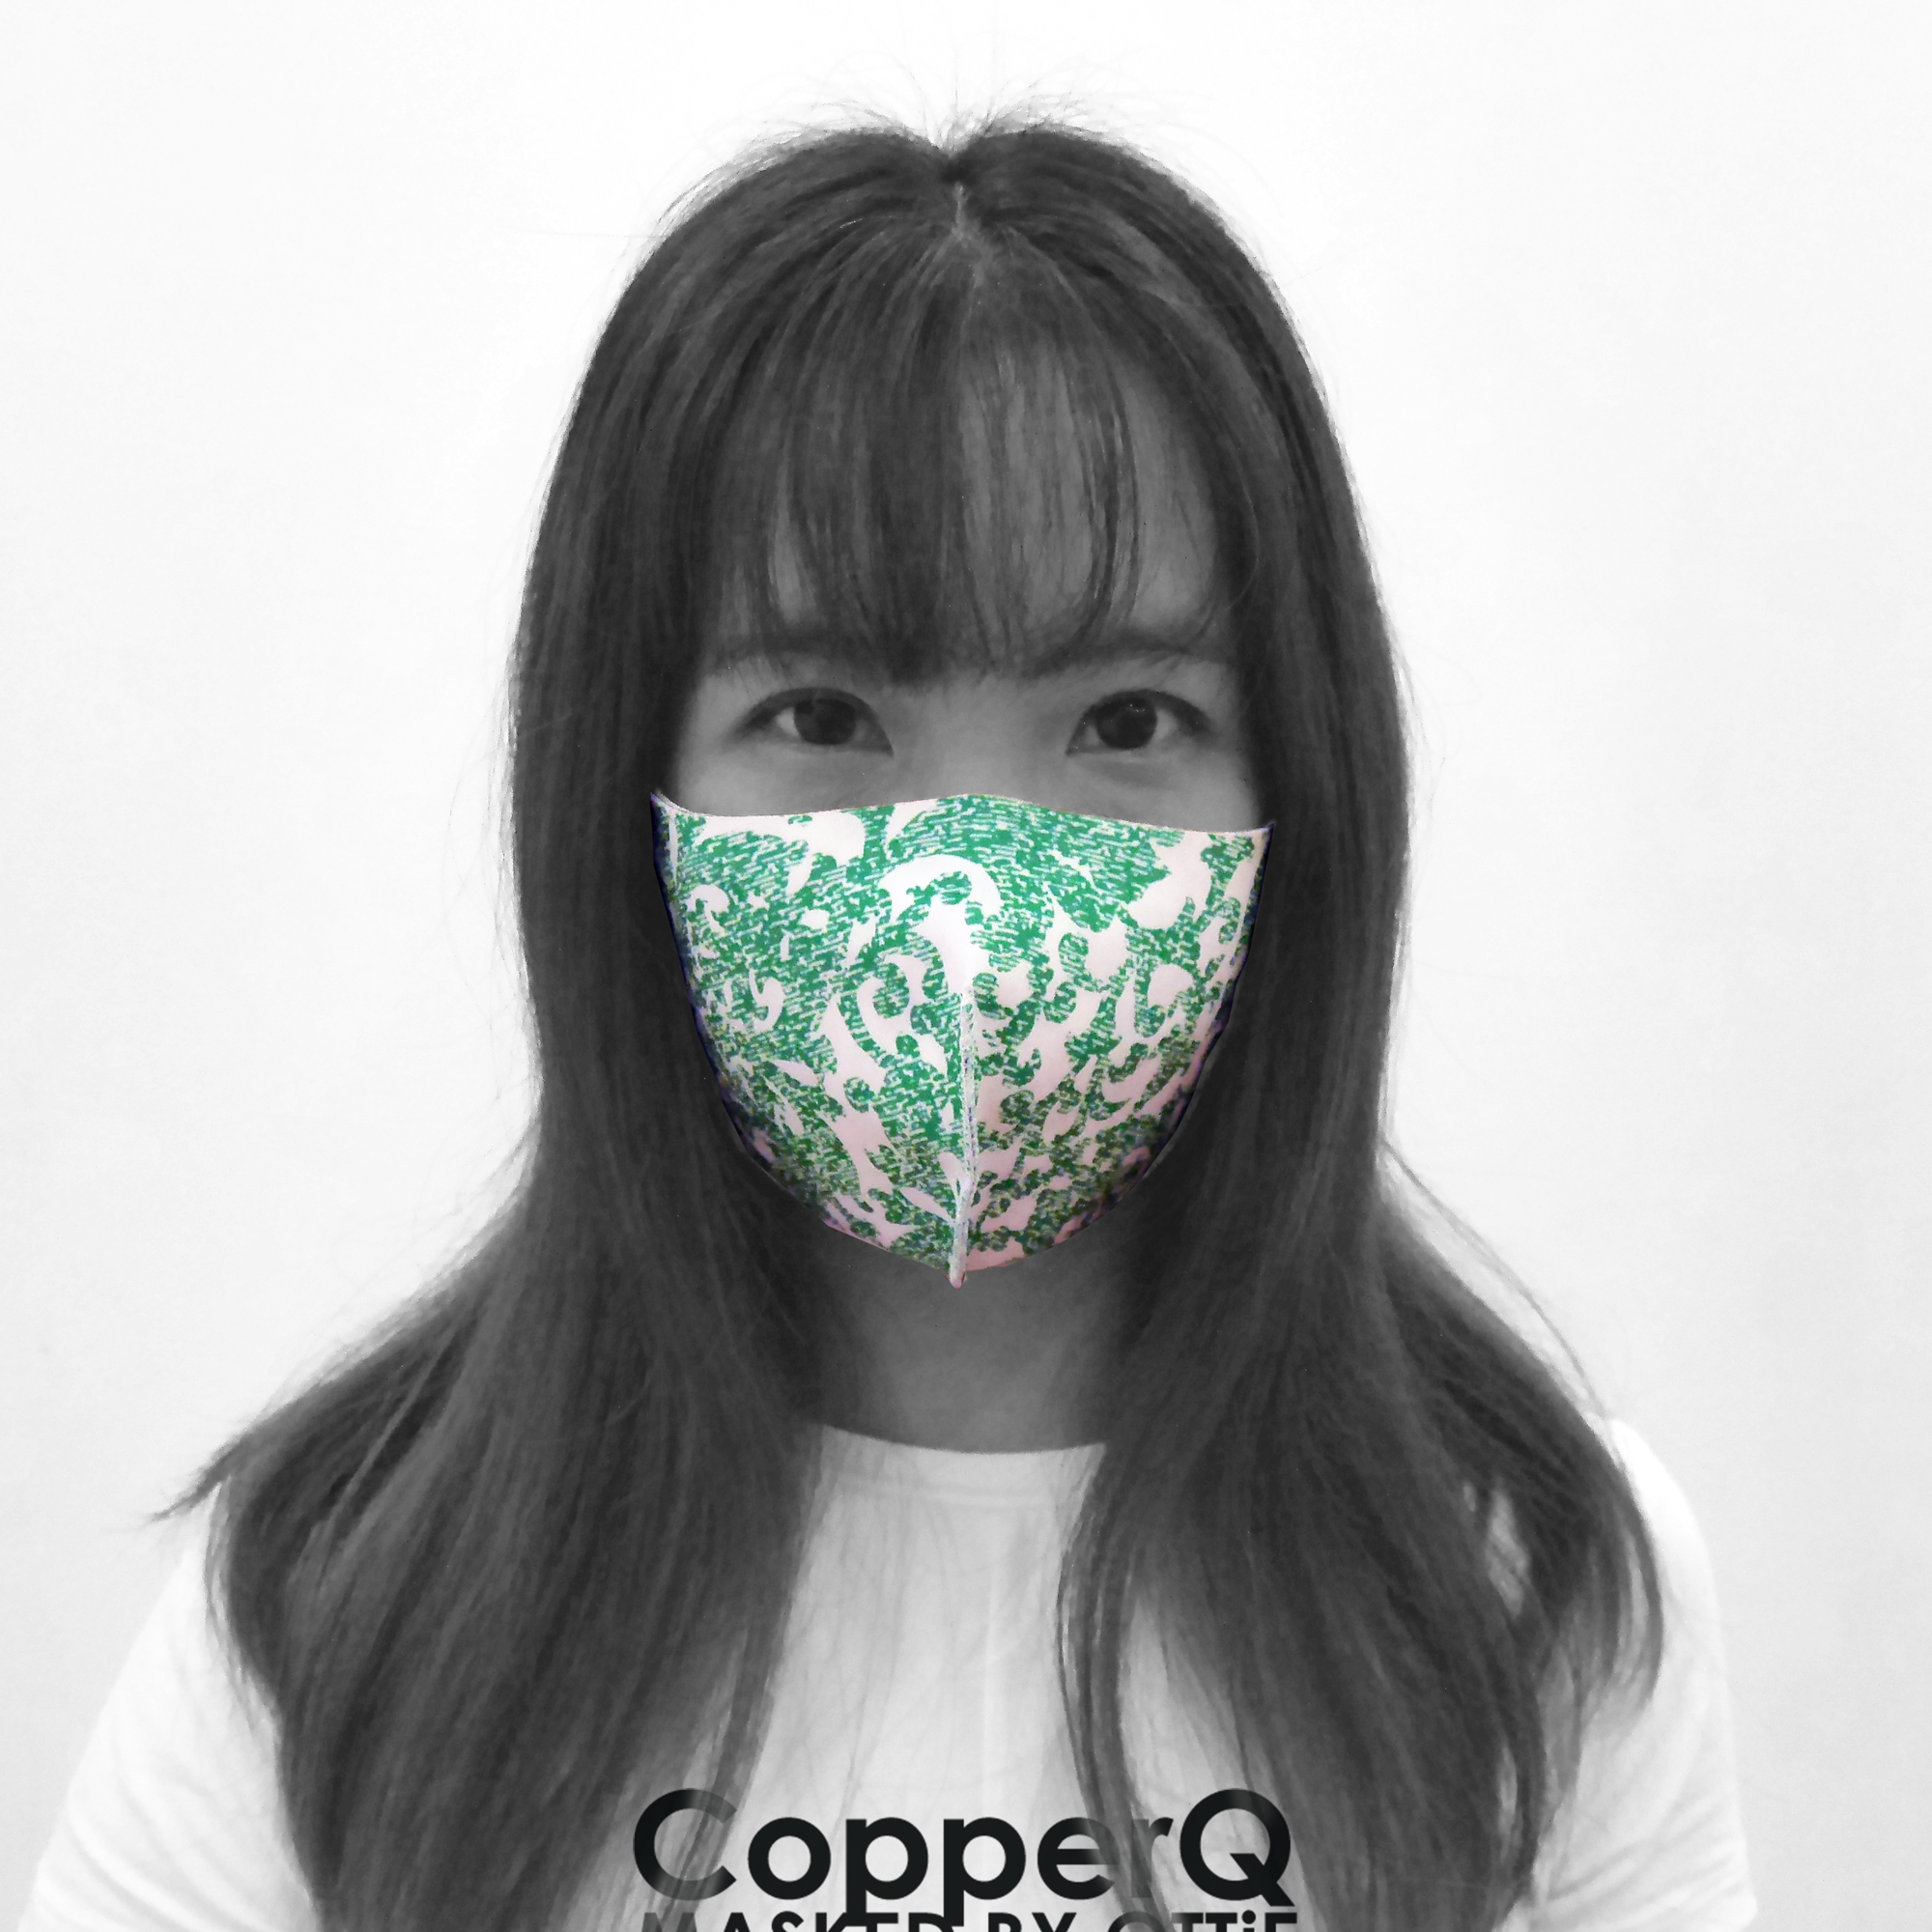 CopperQ Masked by Qttie Green